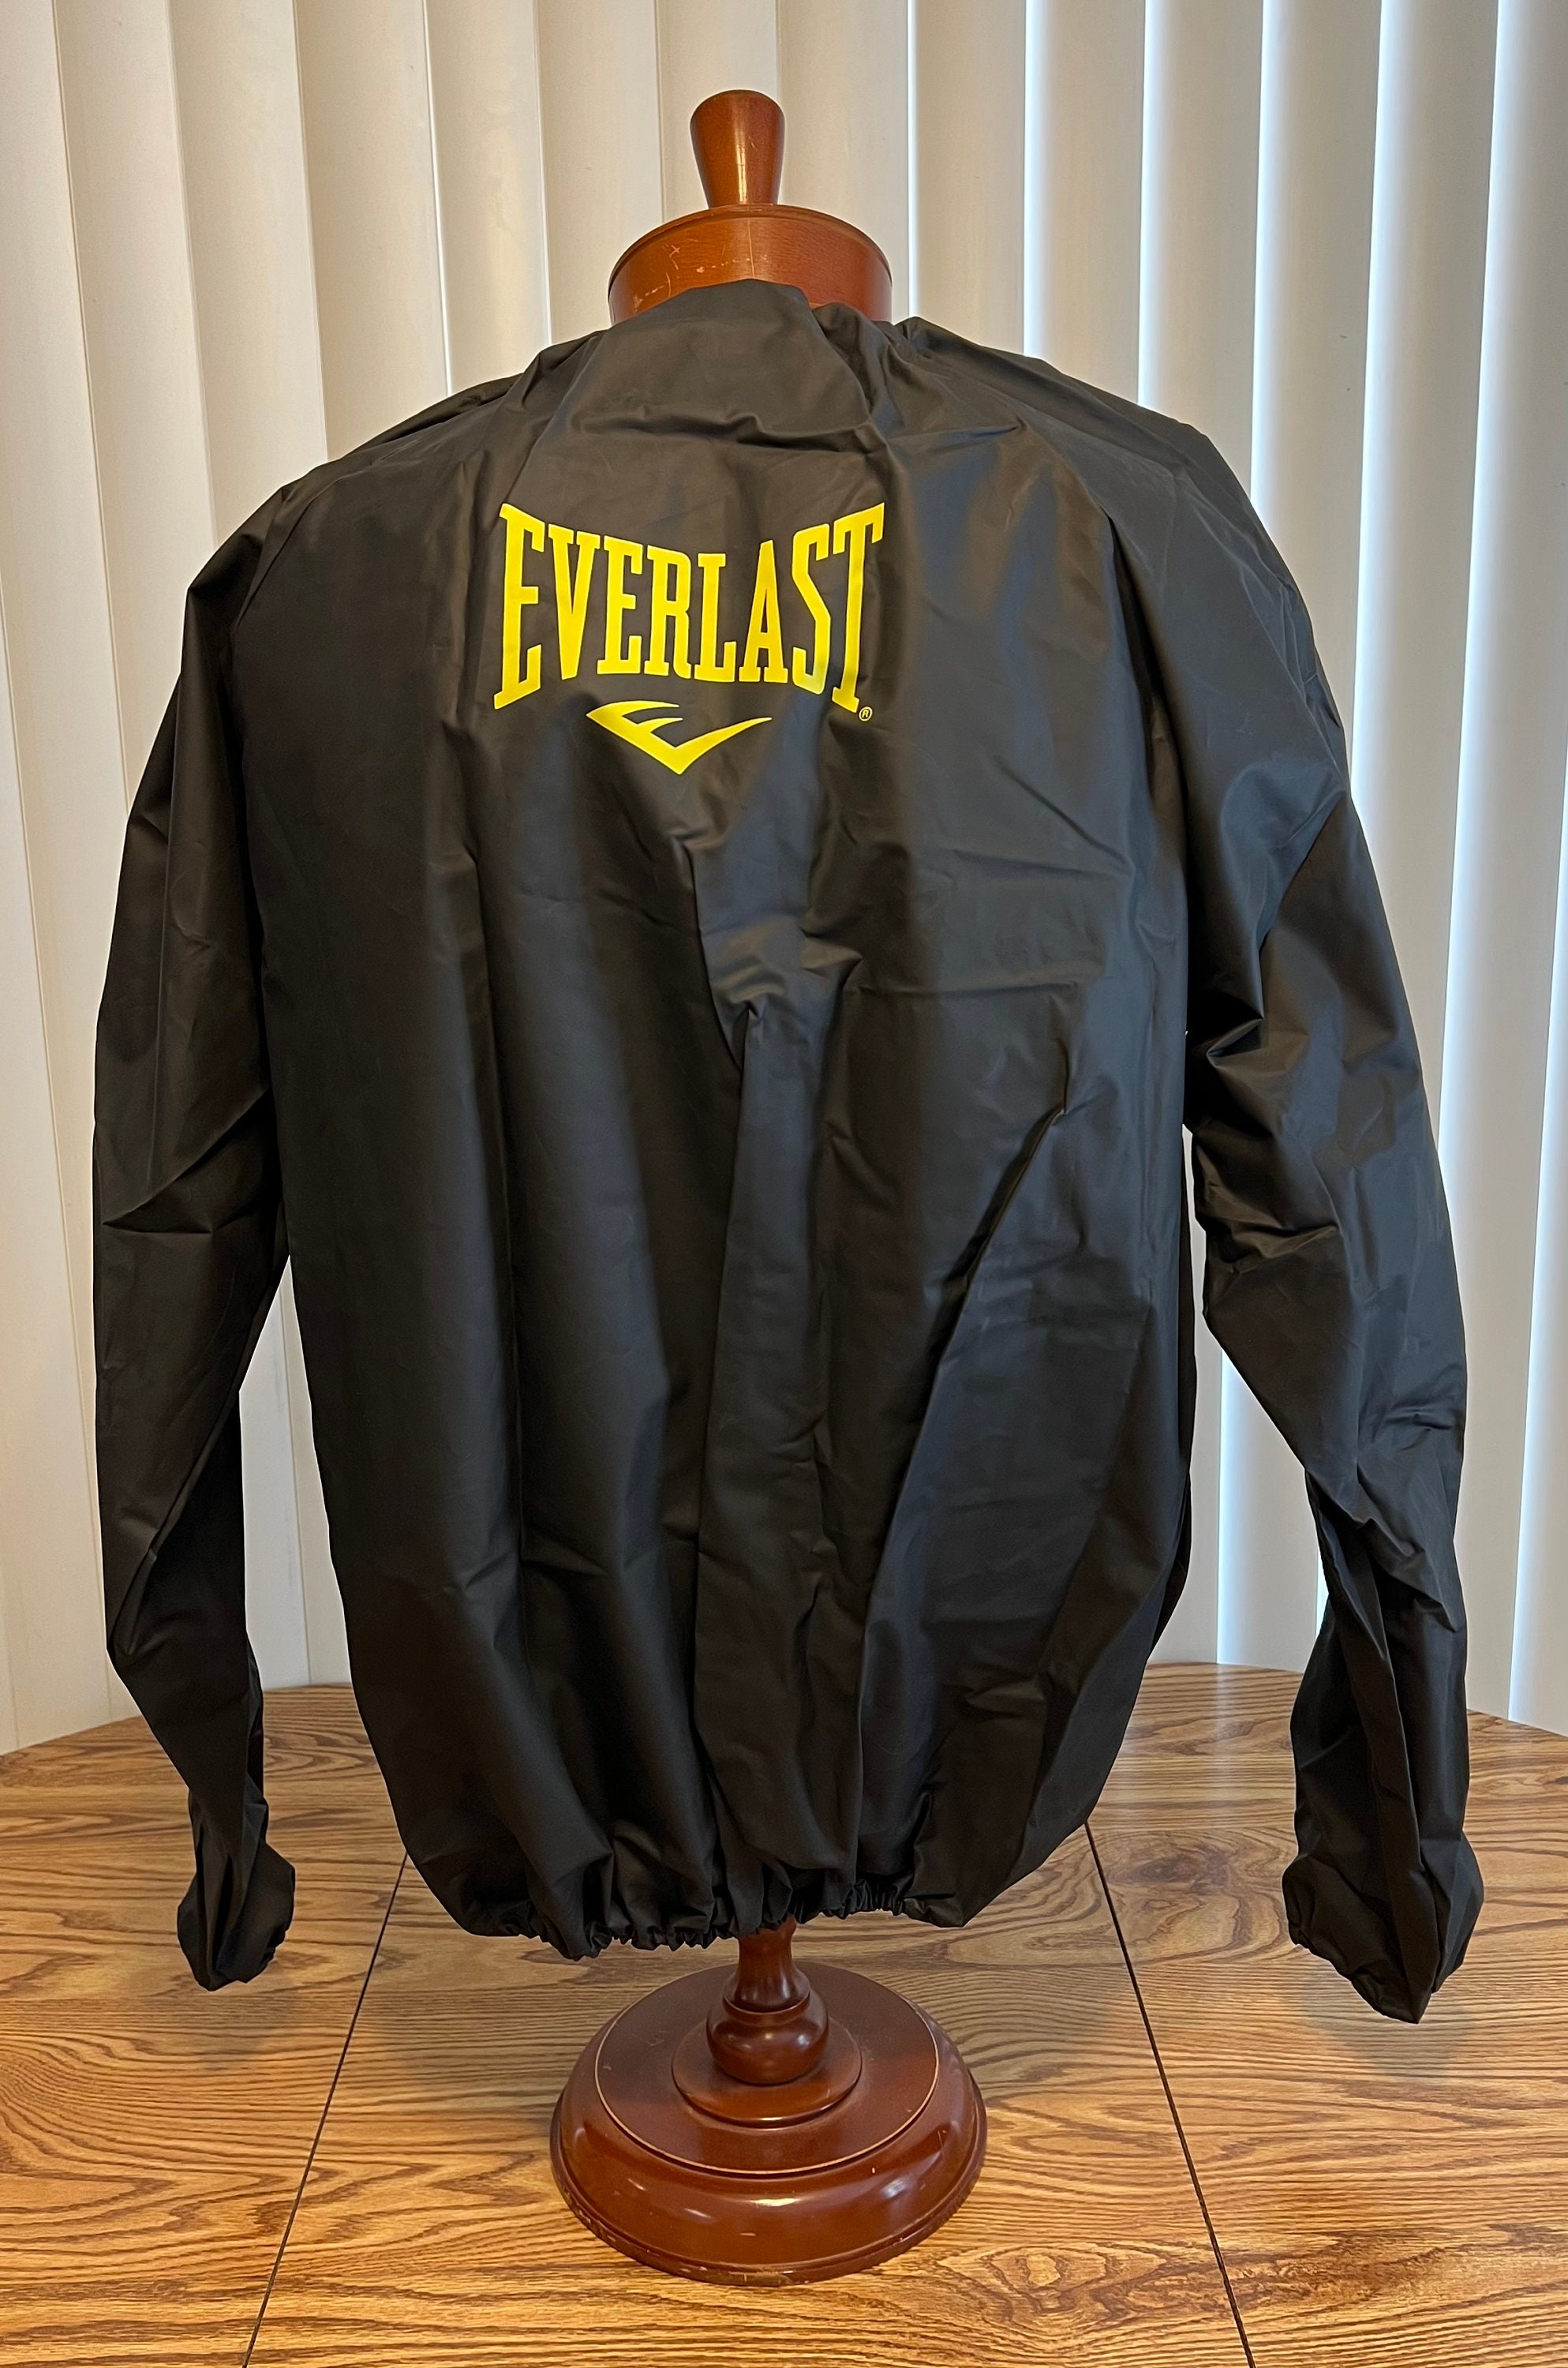 Everlast - Etsy